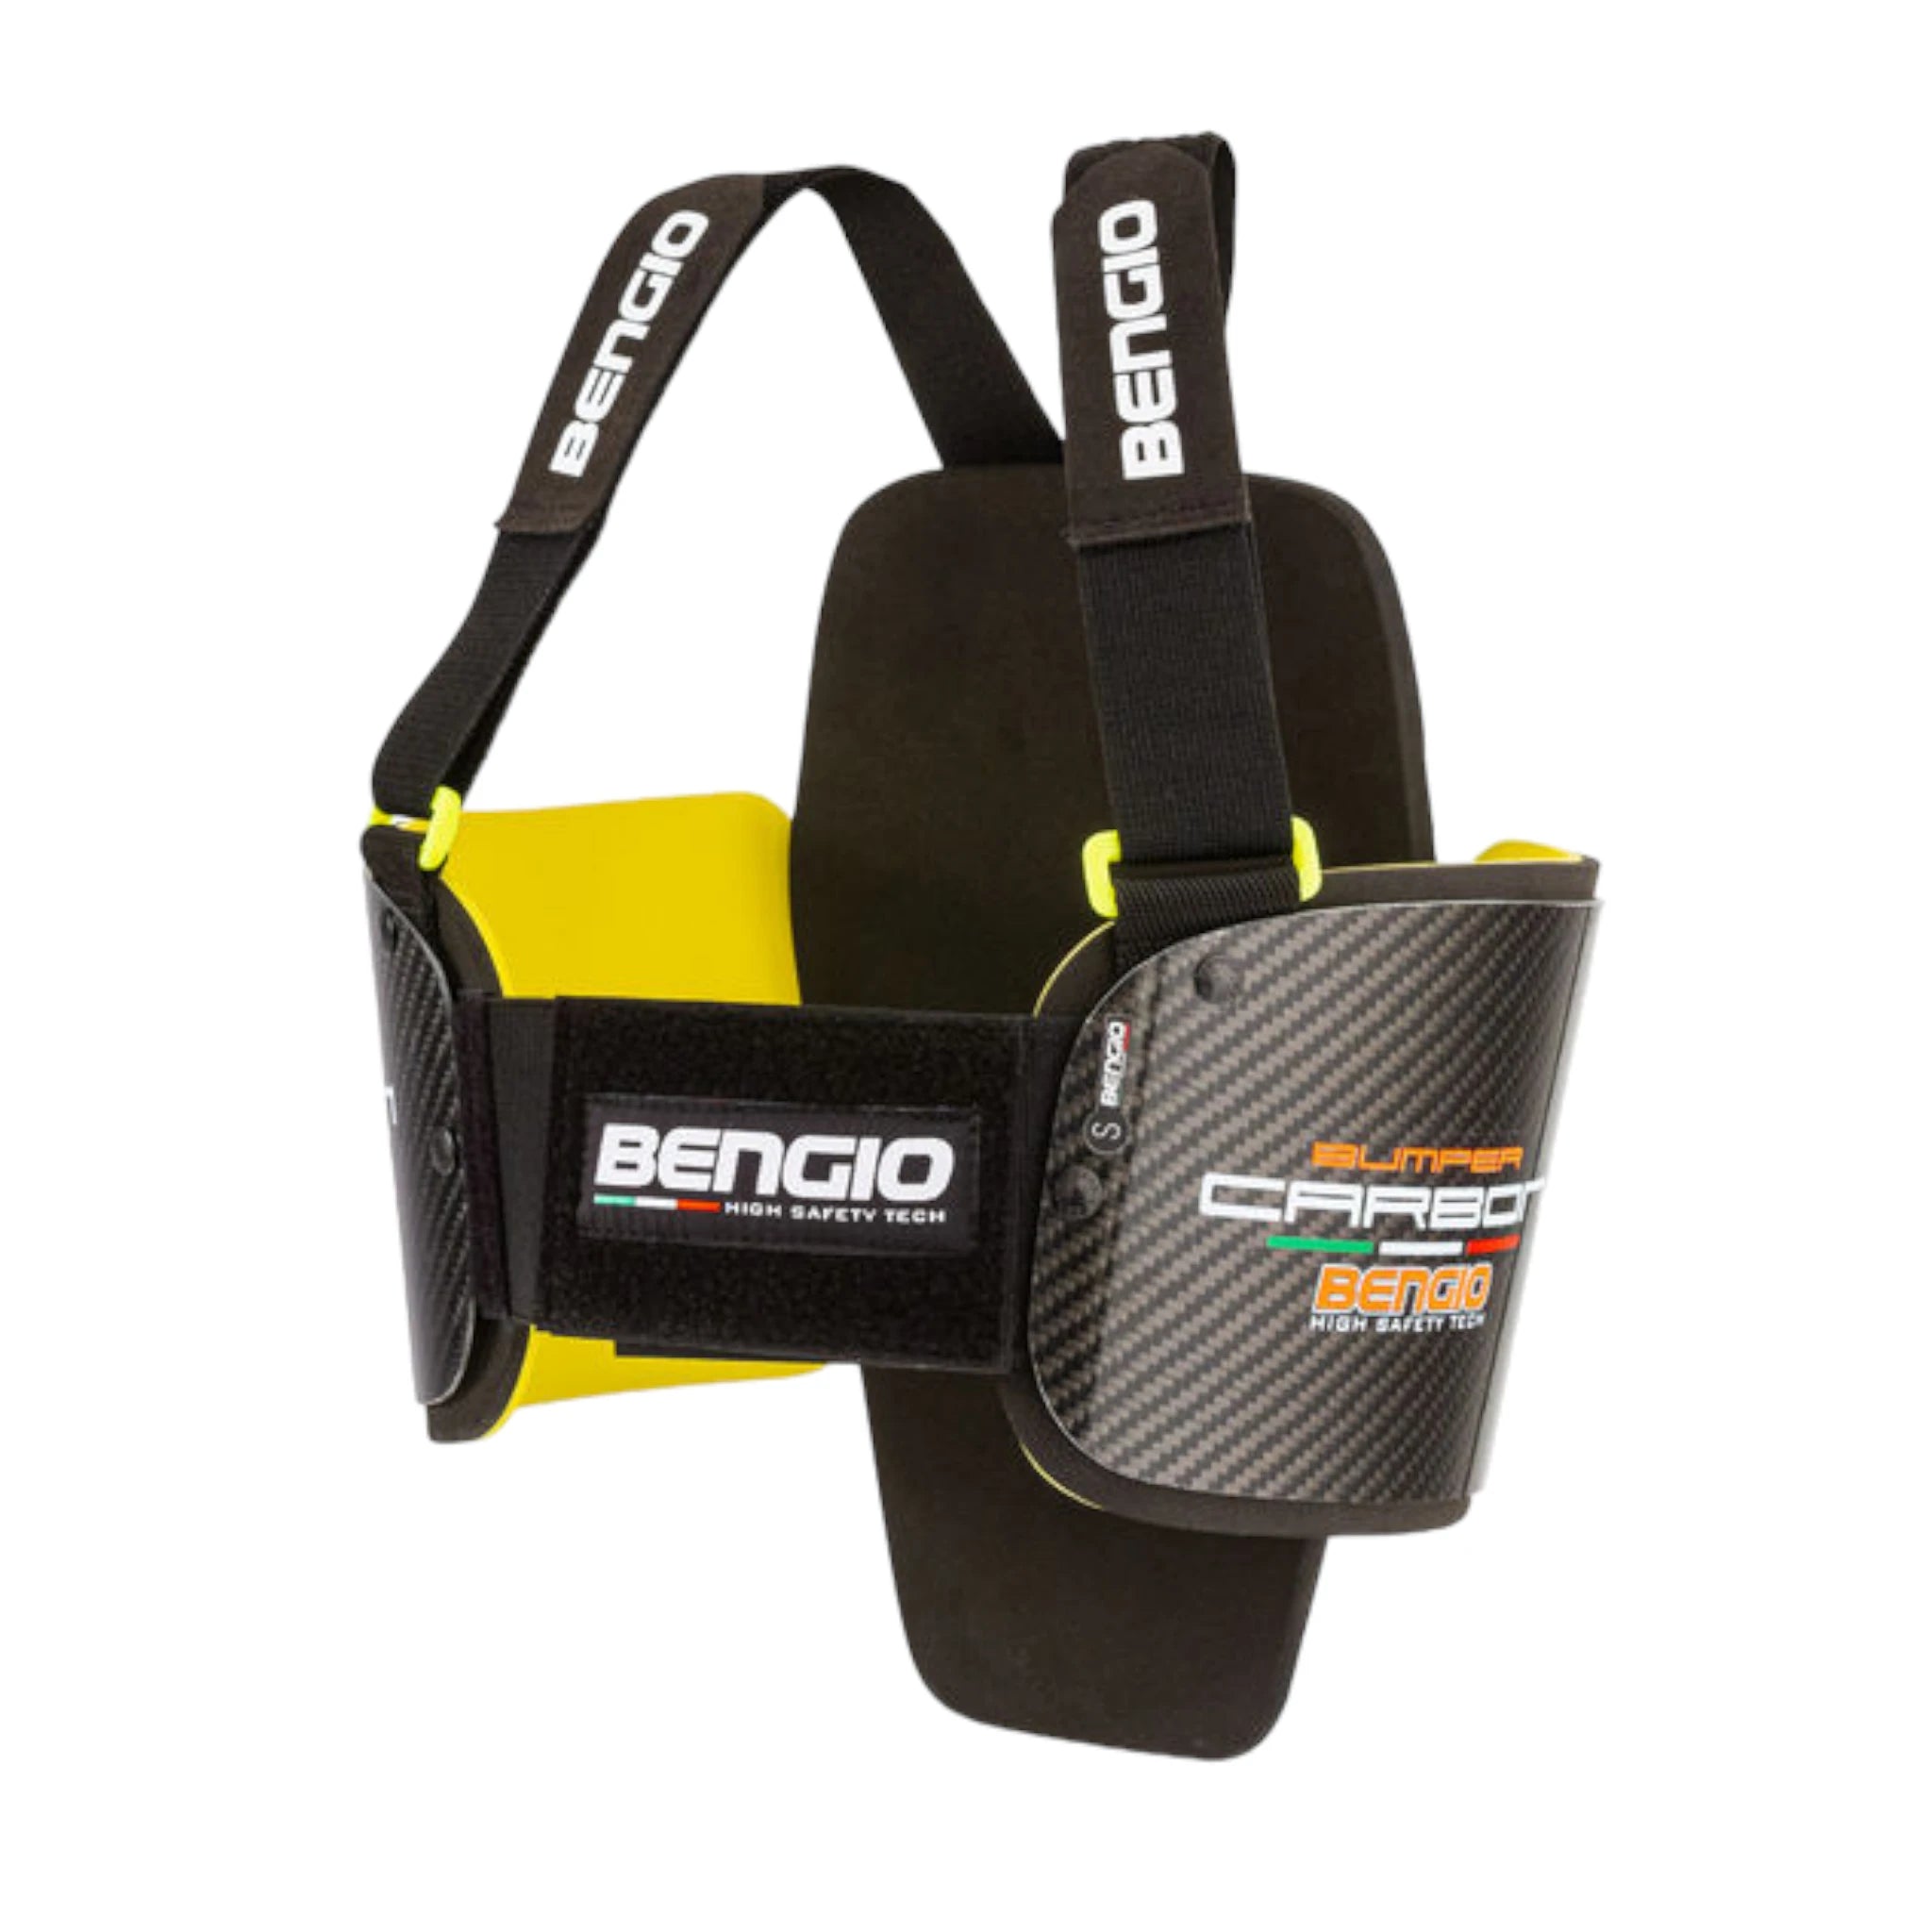 Bengio Bumper Plus Carbon Karting Rib Protector